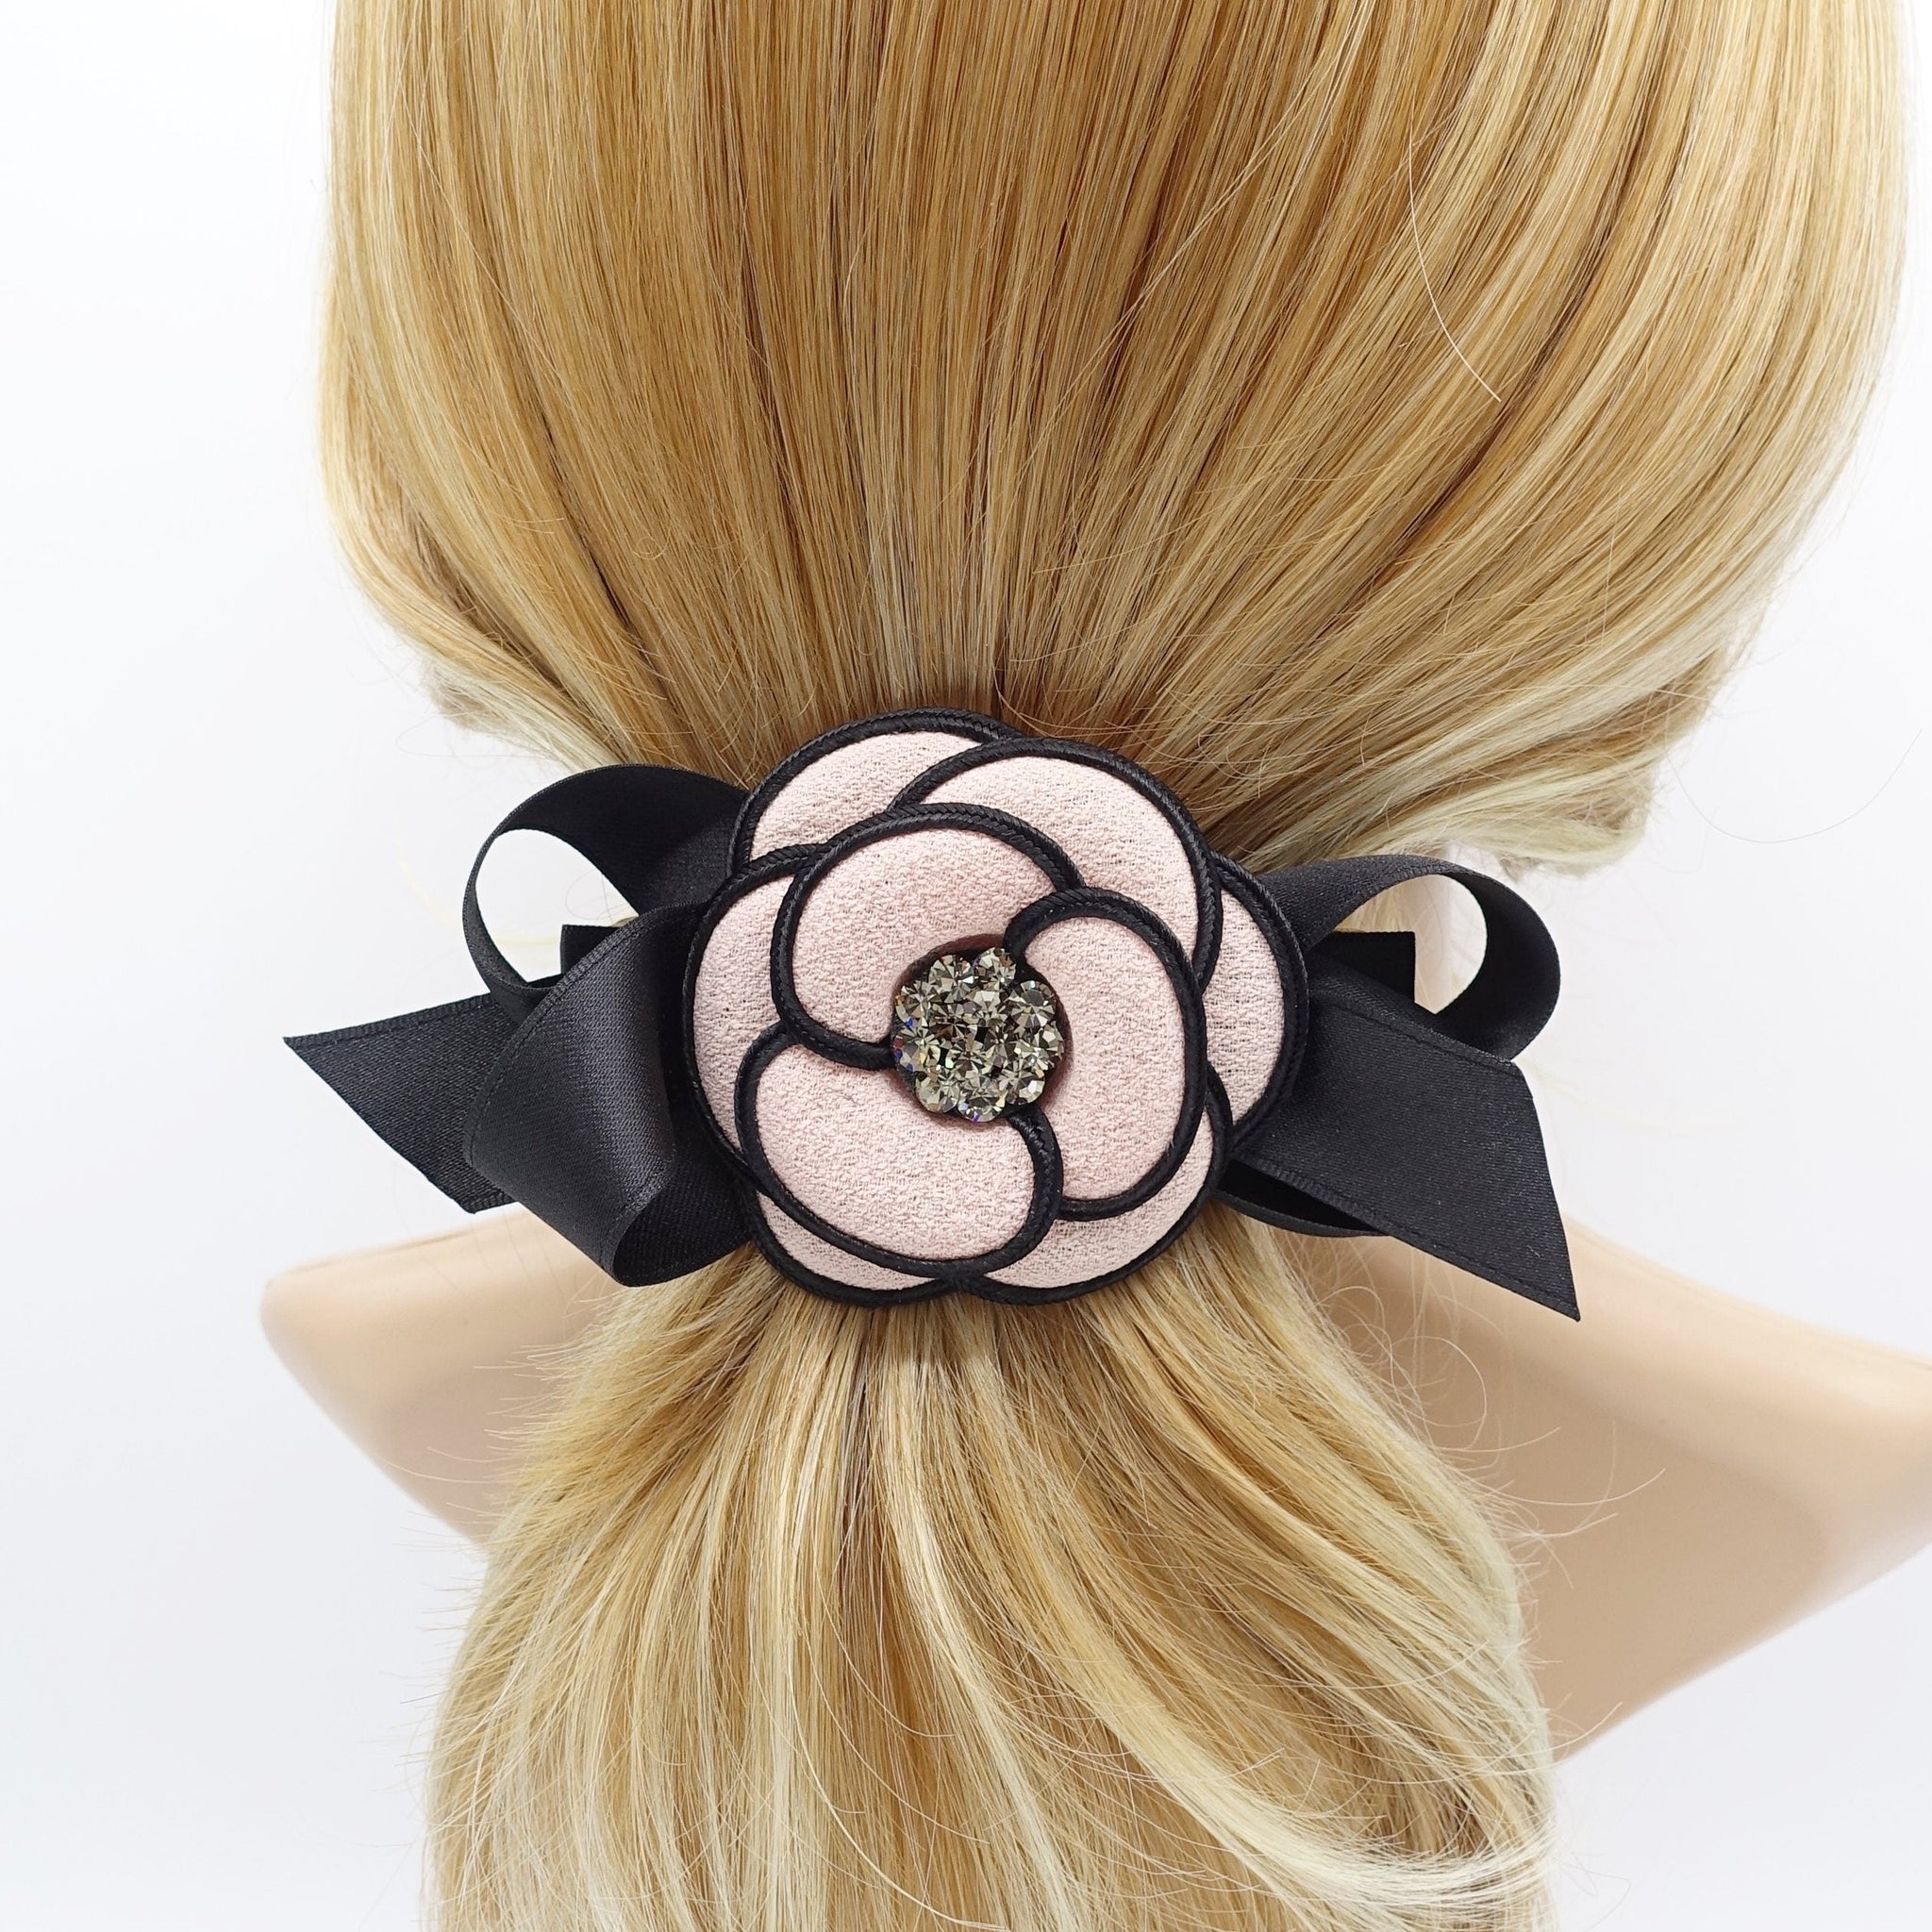 veryshine.com Barrette (Bow) Peach pink camellia  hair bow rhinestone embellished flower french barrette